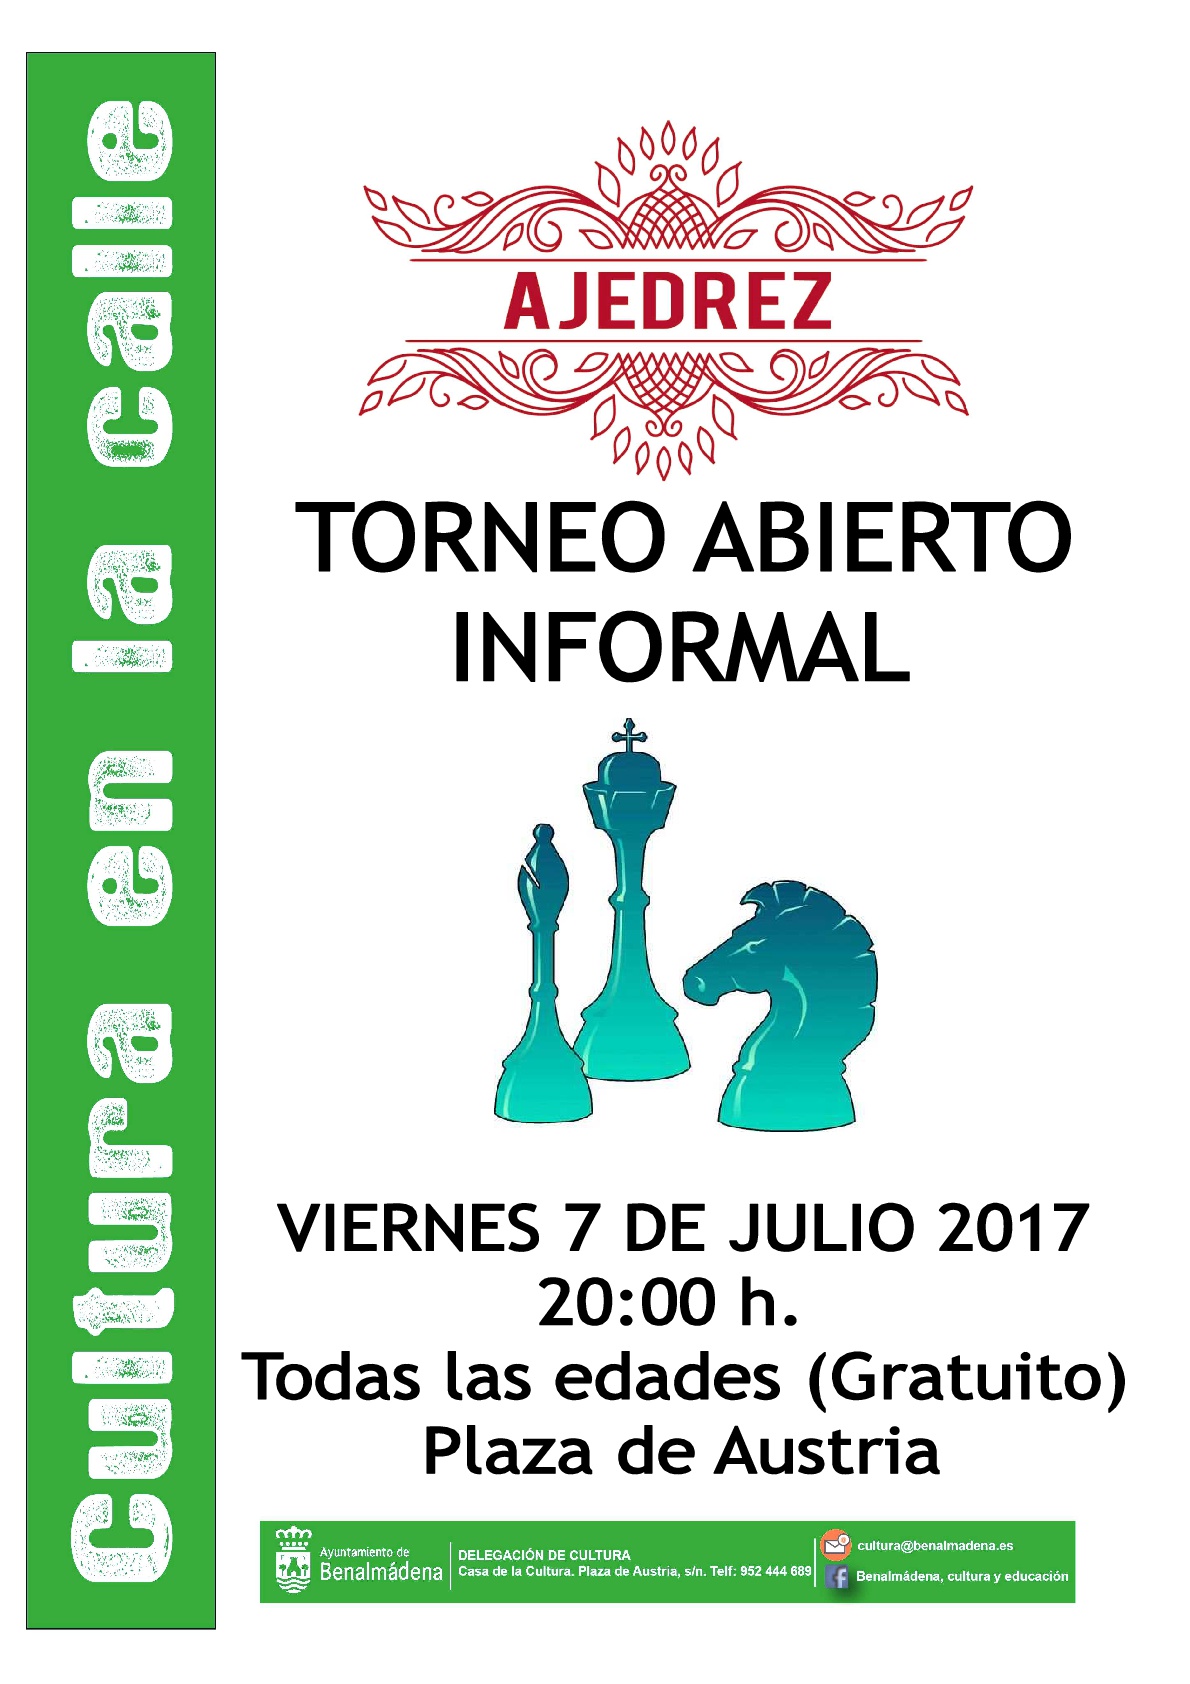 Torneo Abierto Informal de Ajedrez